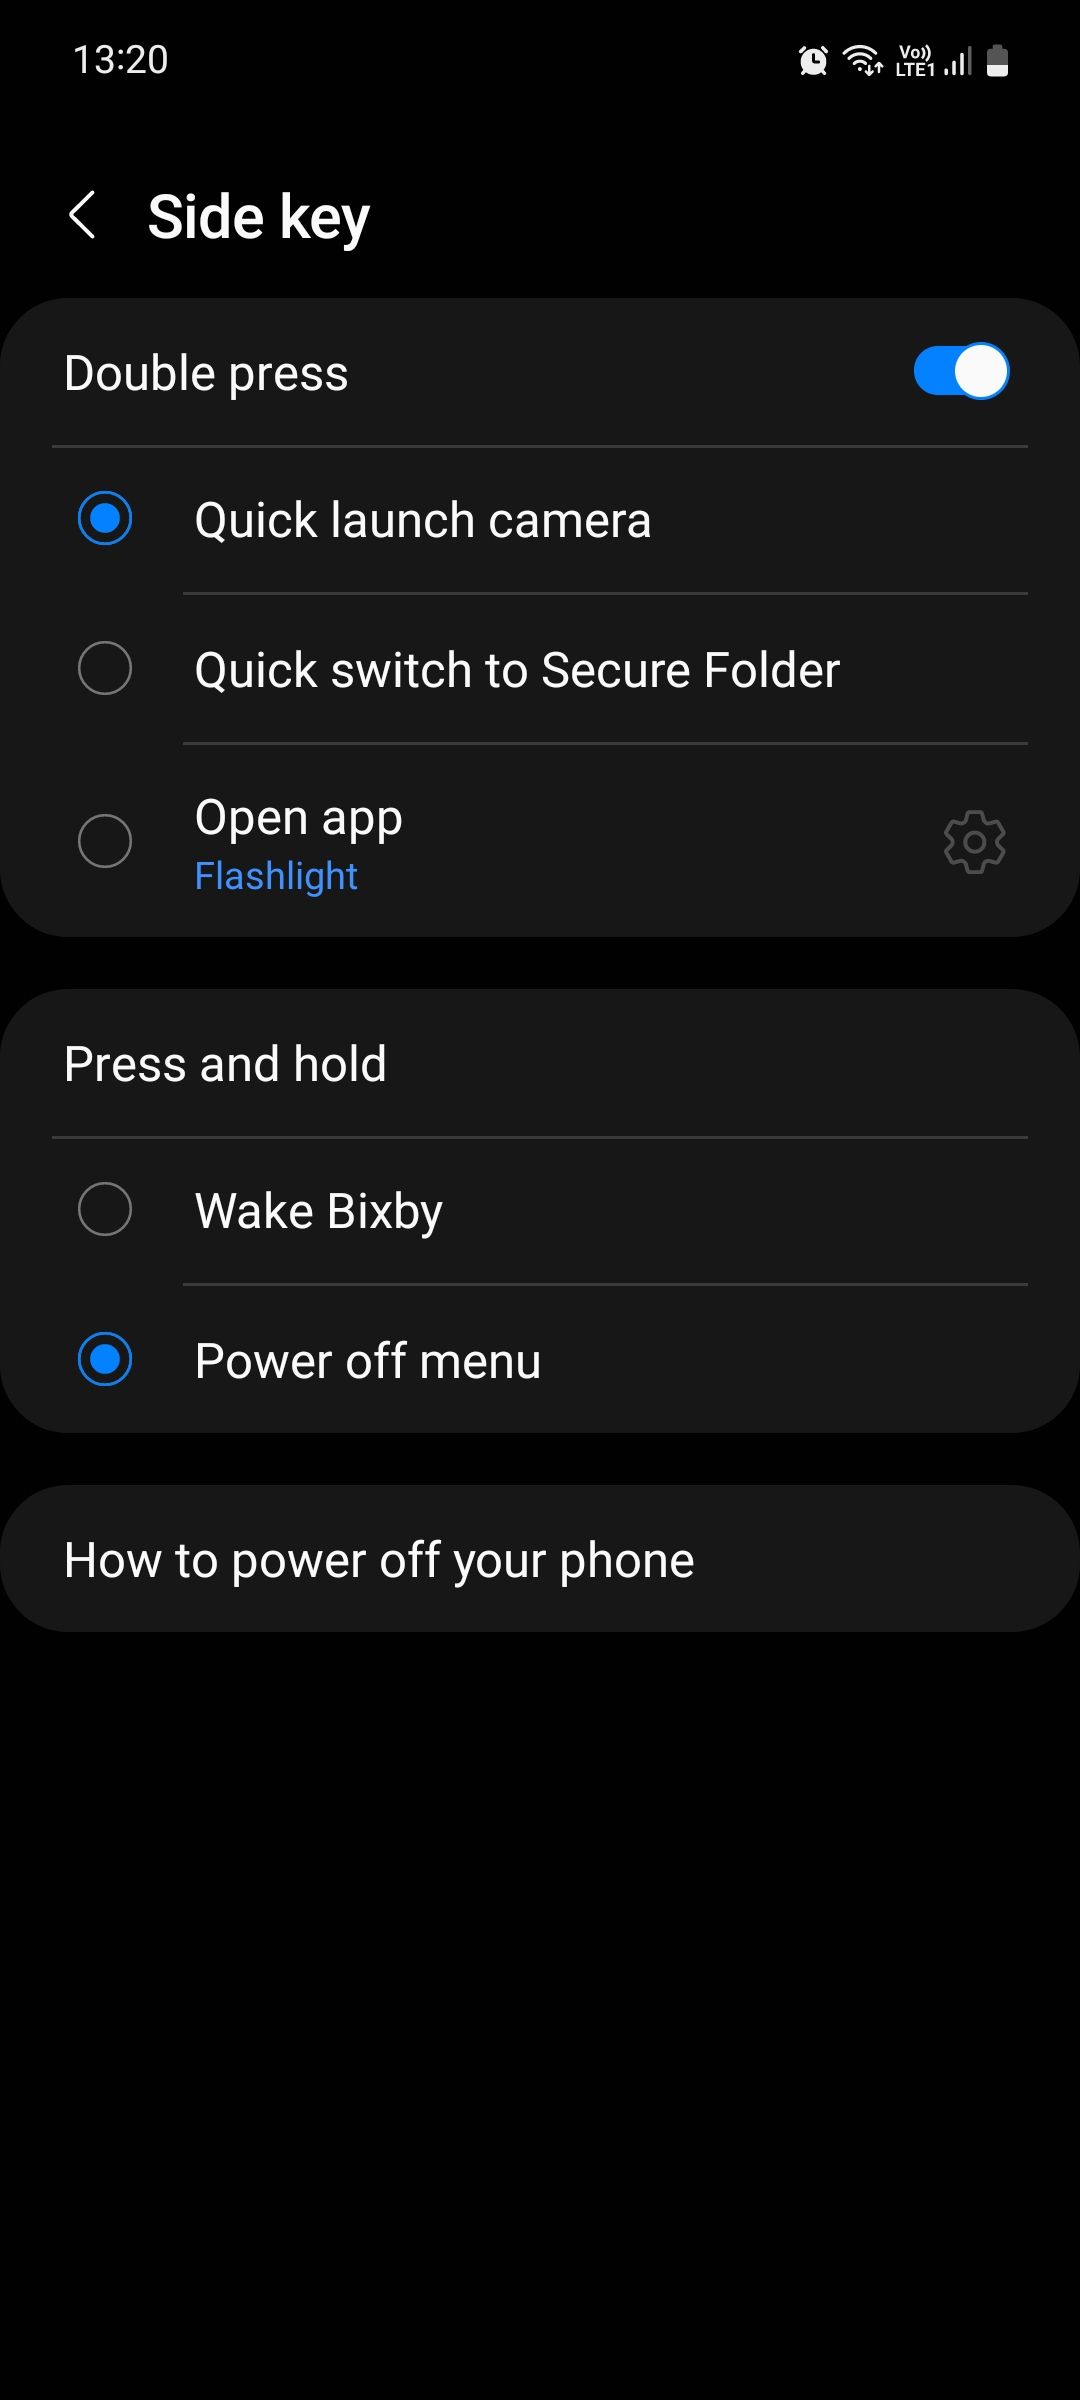 Samsung One UI Side key menu